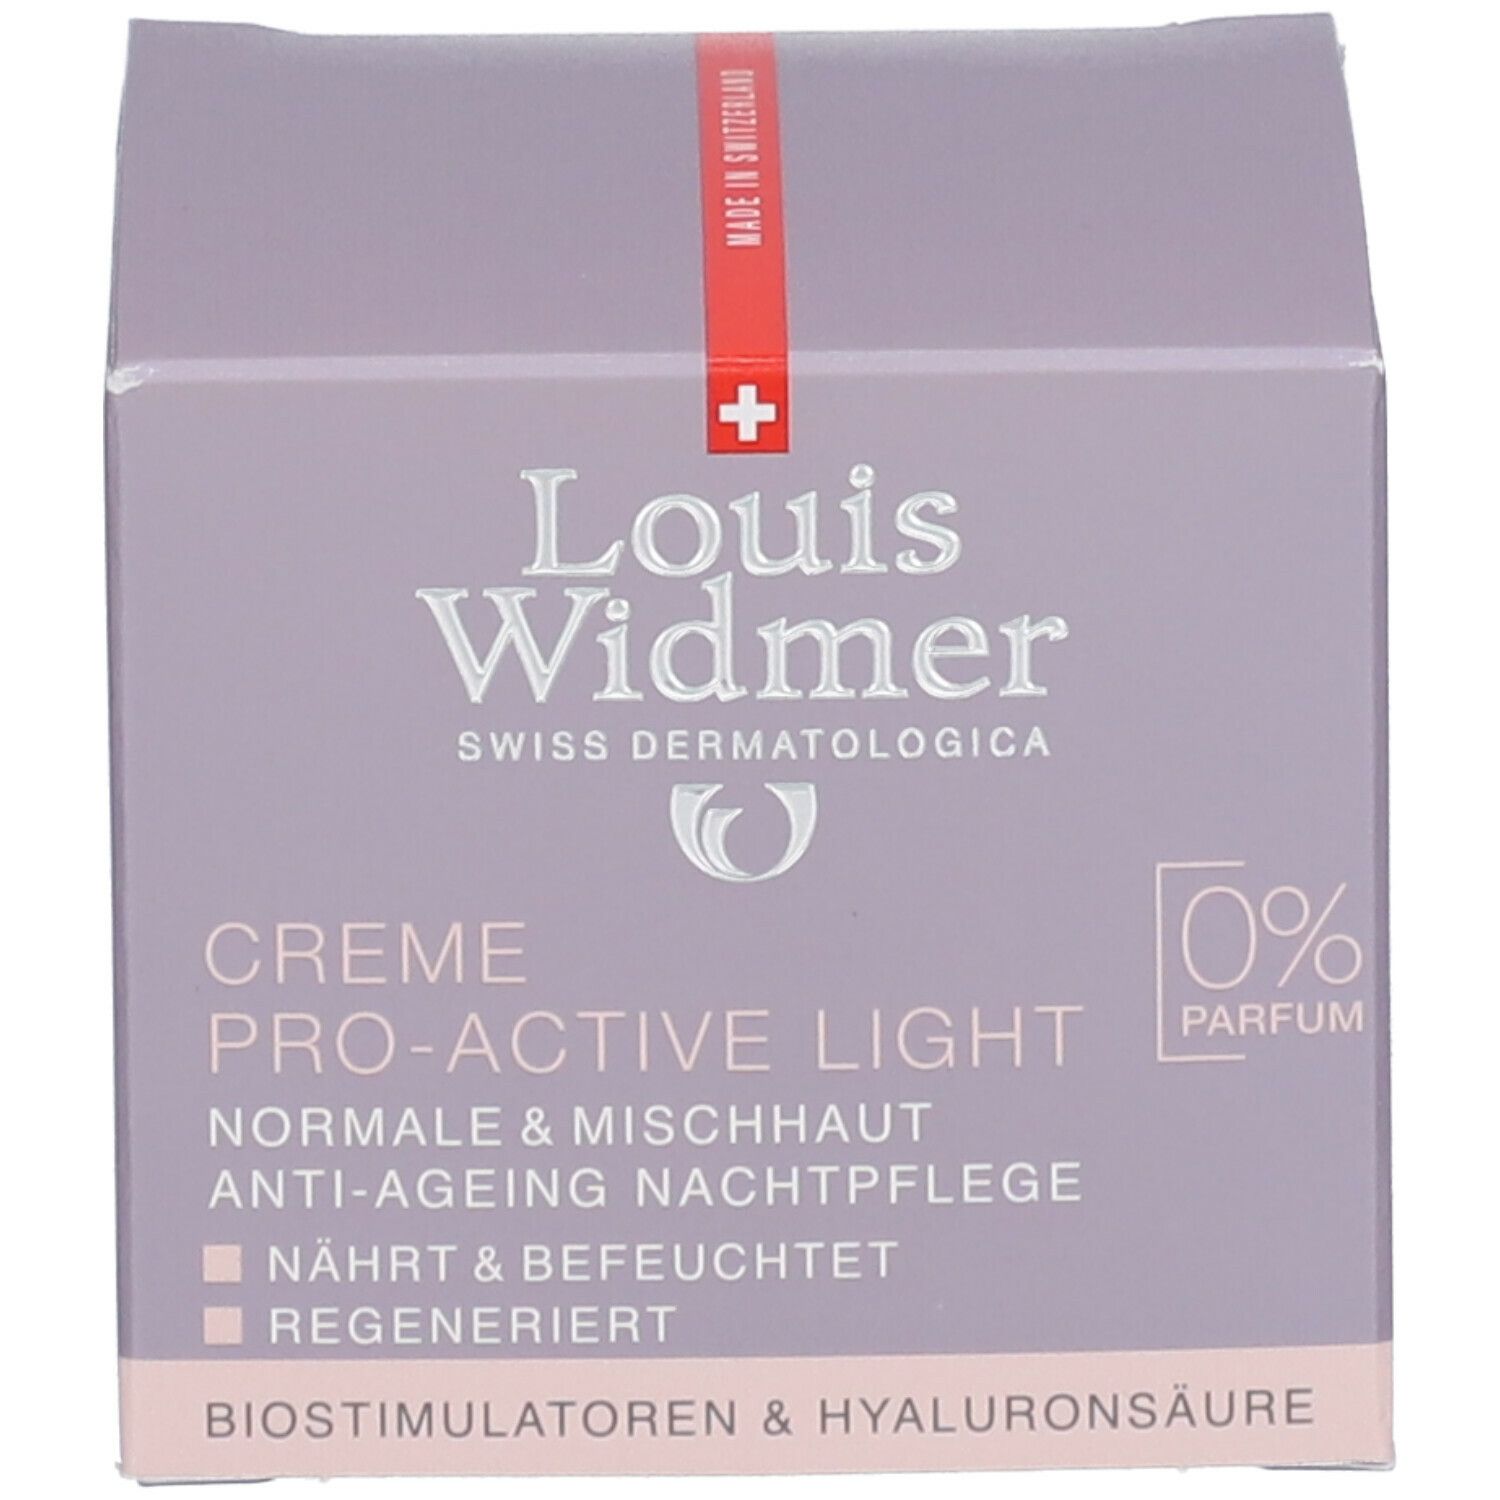 Louis Widmer Creme Pro-Active Light unparfümiert